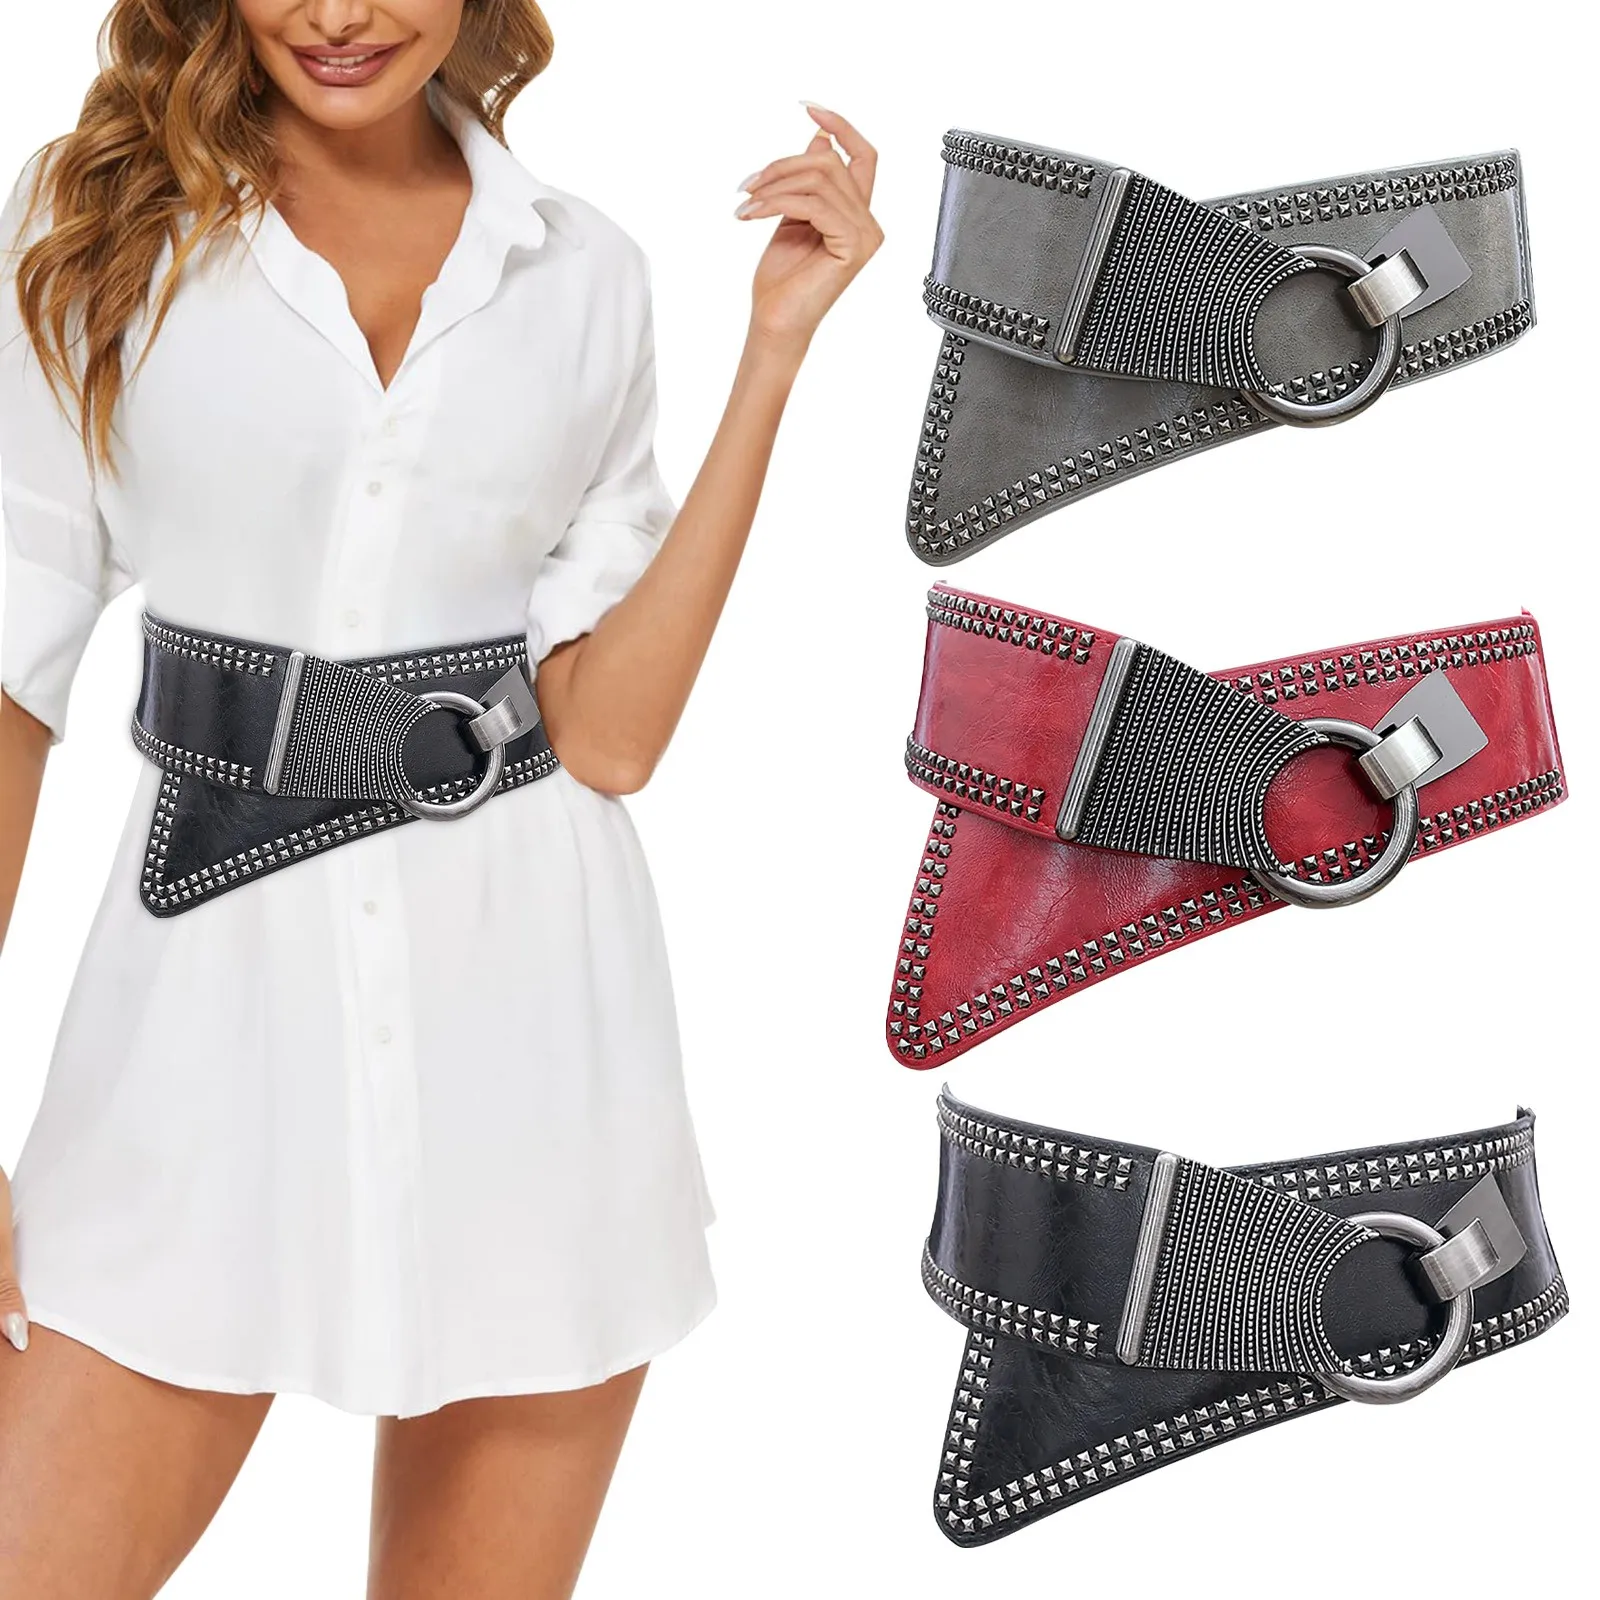 New Fashion Leather Belts For Women Personality Goth Punk Style Rivet Interlock Buckle Belt Y2k Accessories Black Belt For Jeans